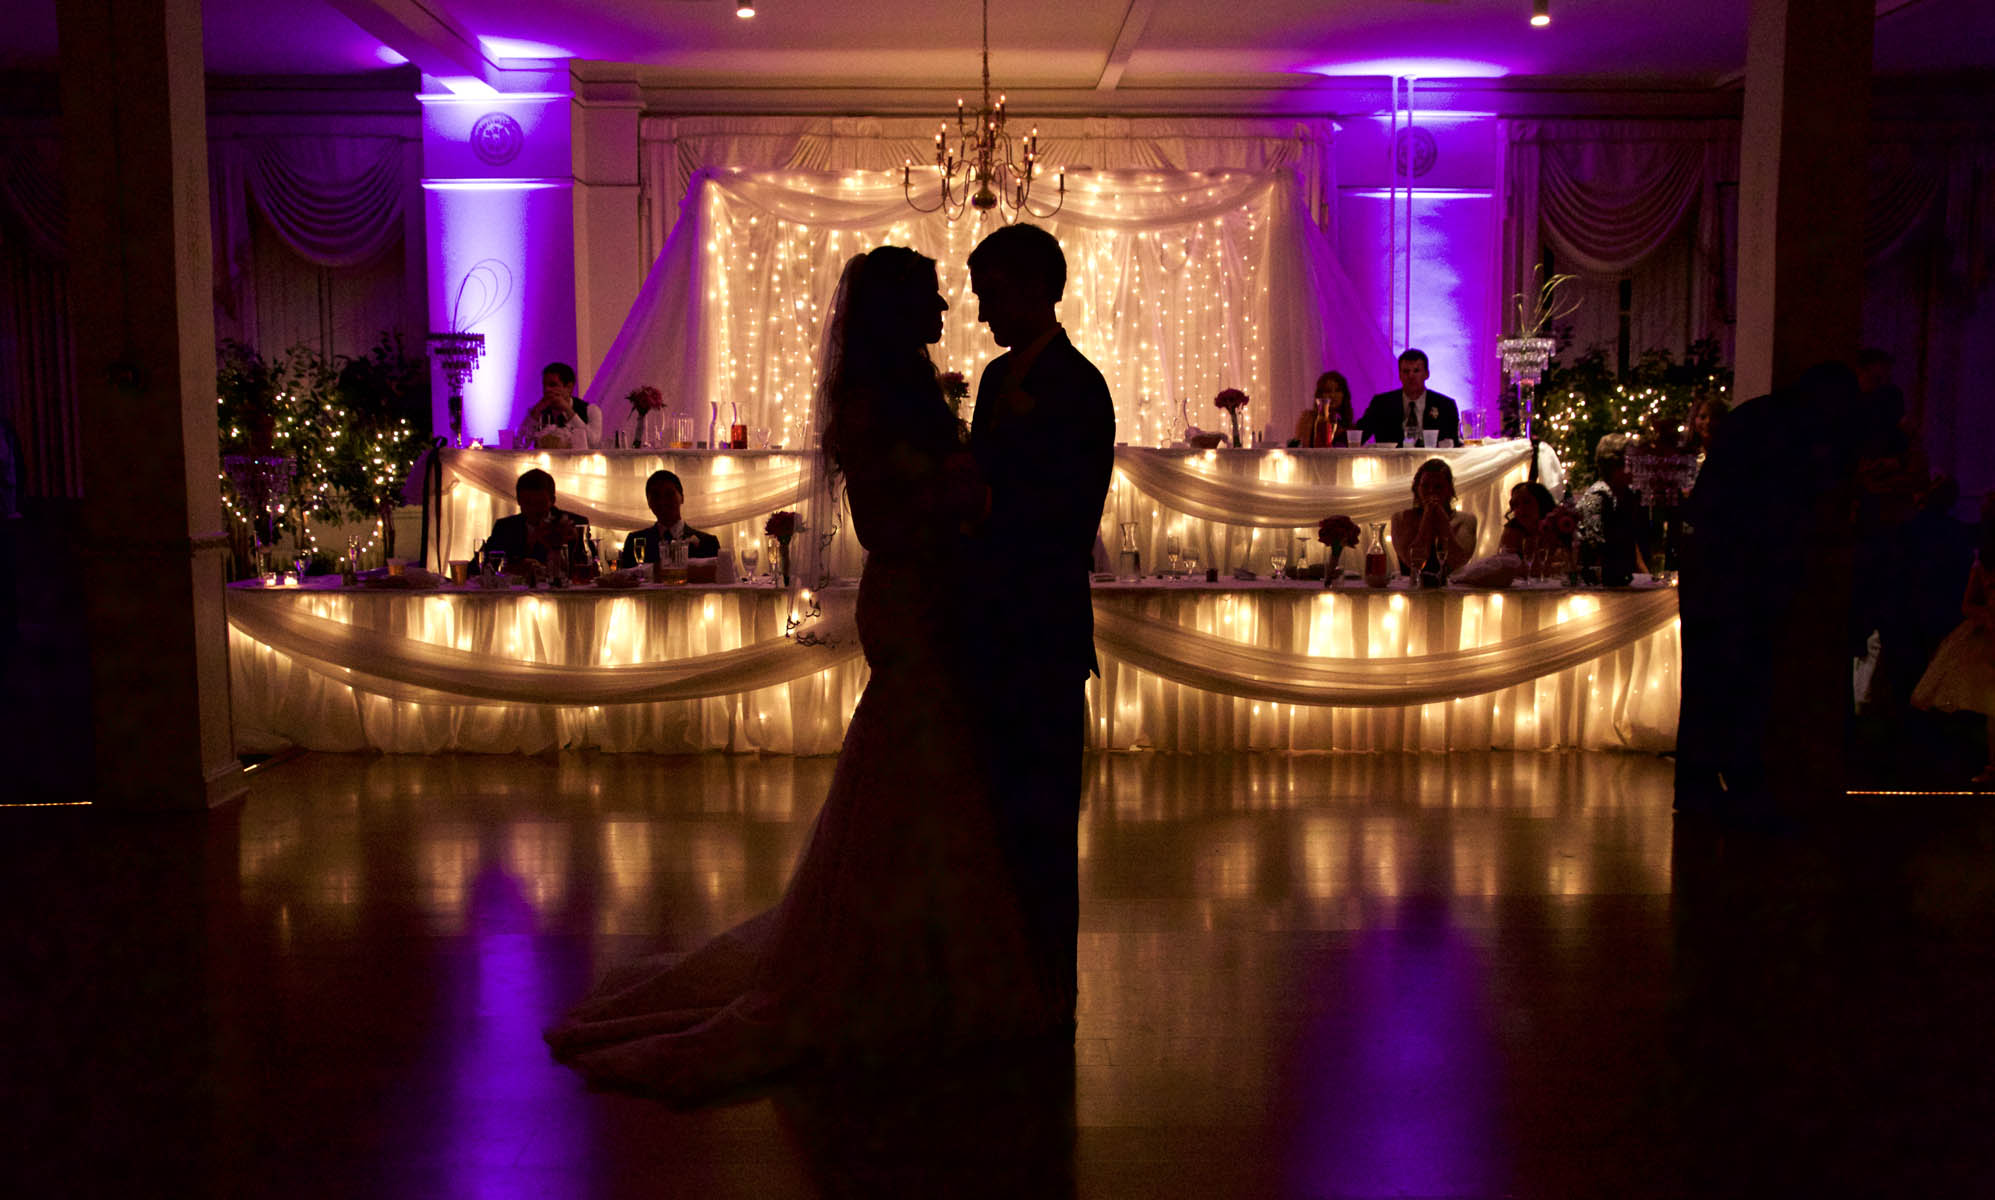 First dance, Alissa & Brandon's wedding reception at Hamilton's 110 North East. Wedding photography by Tiffany & Steve Warmowski.